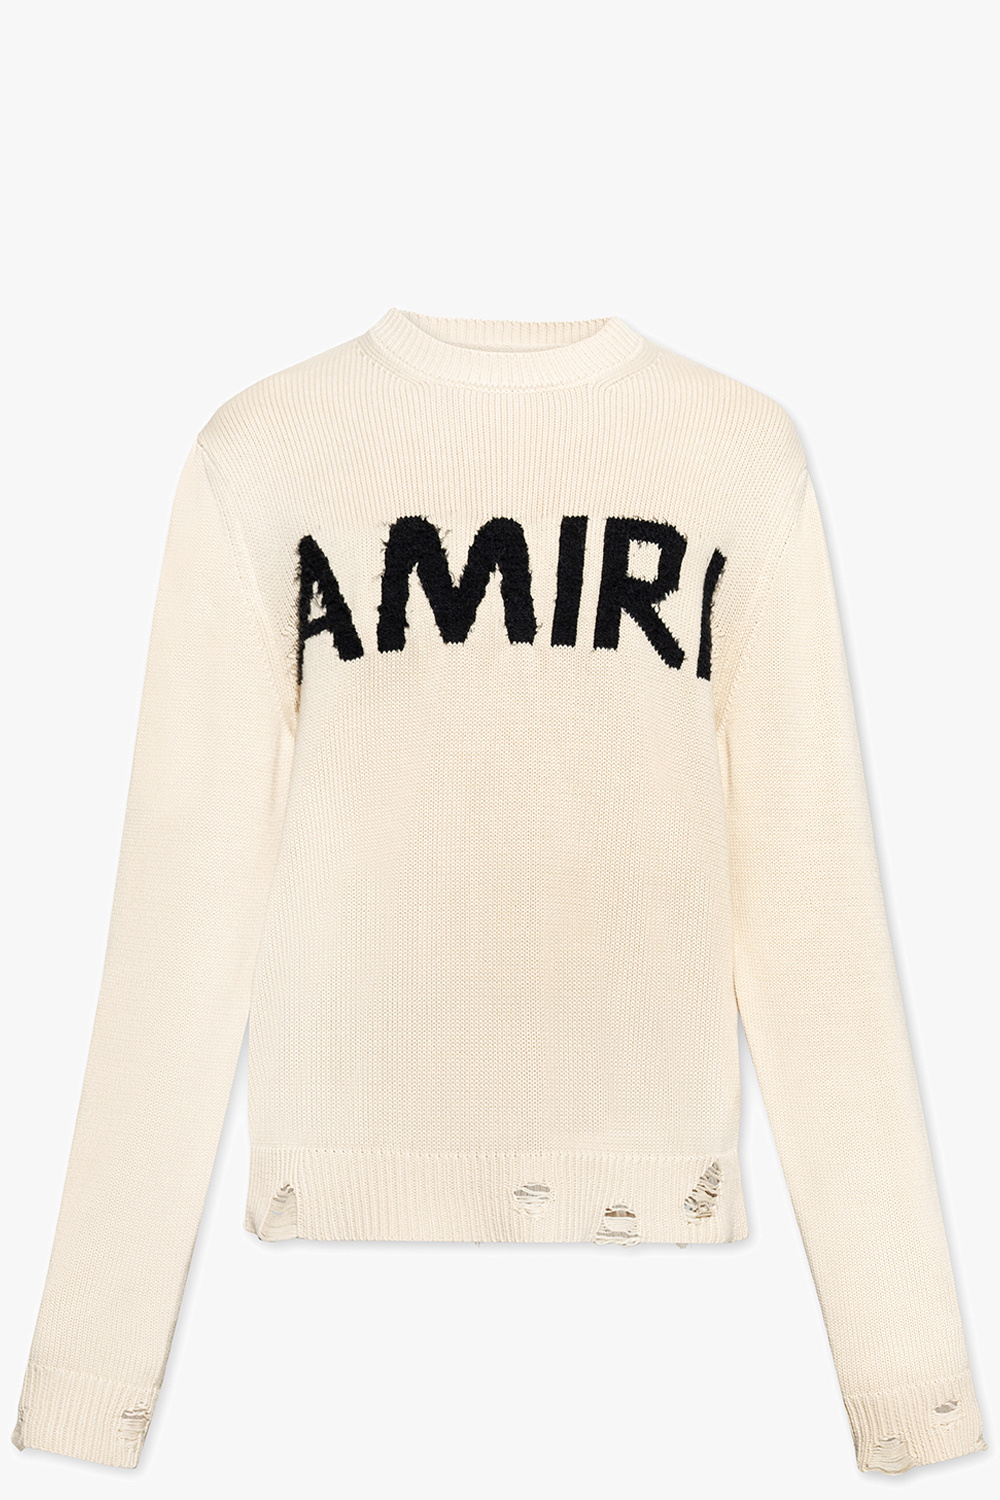 Amiri sweater Fiorucci with vintage effect